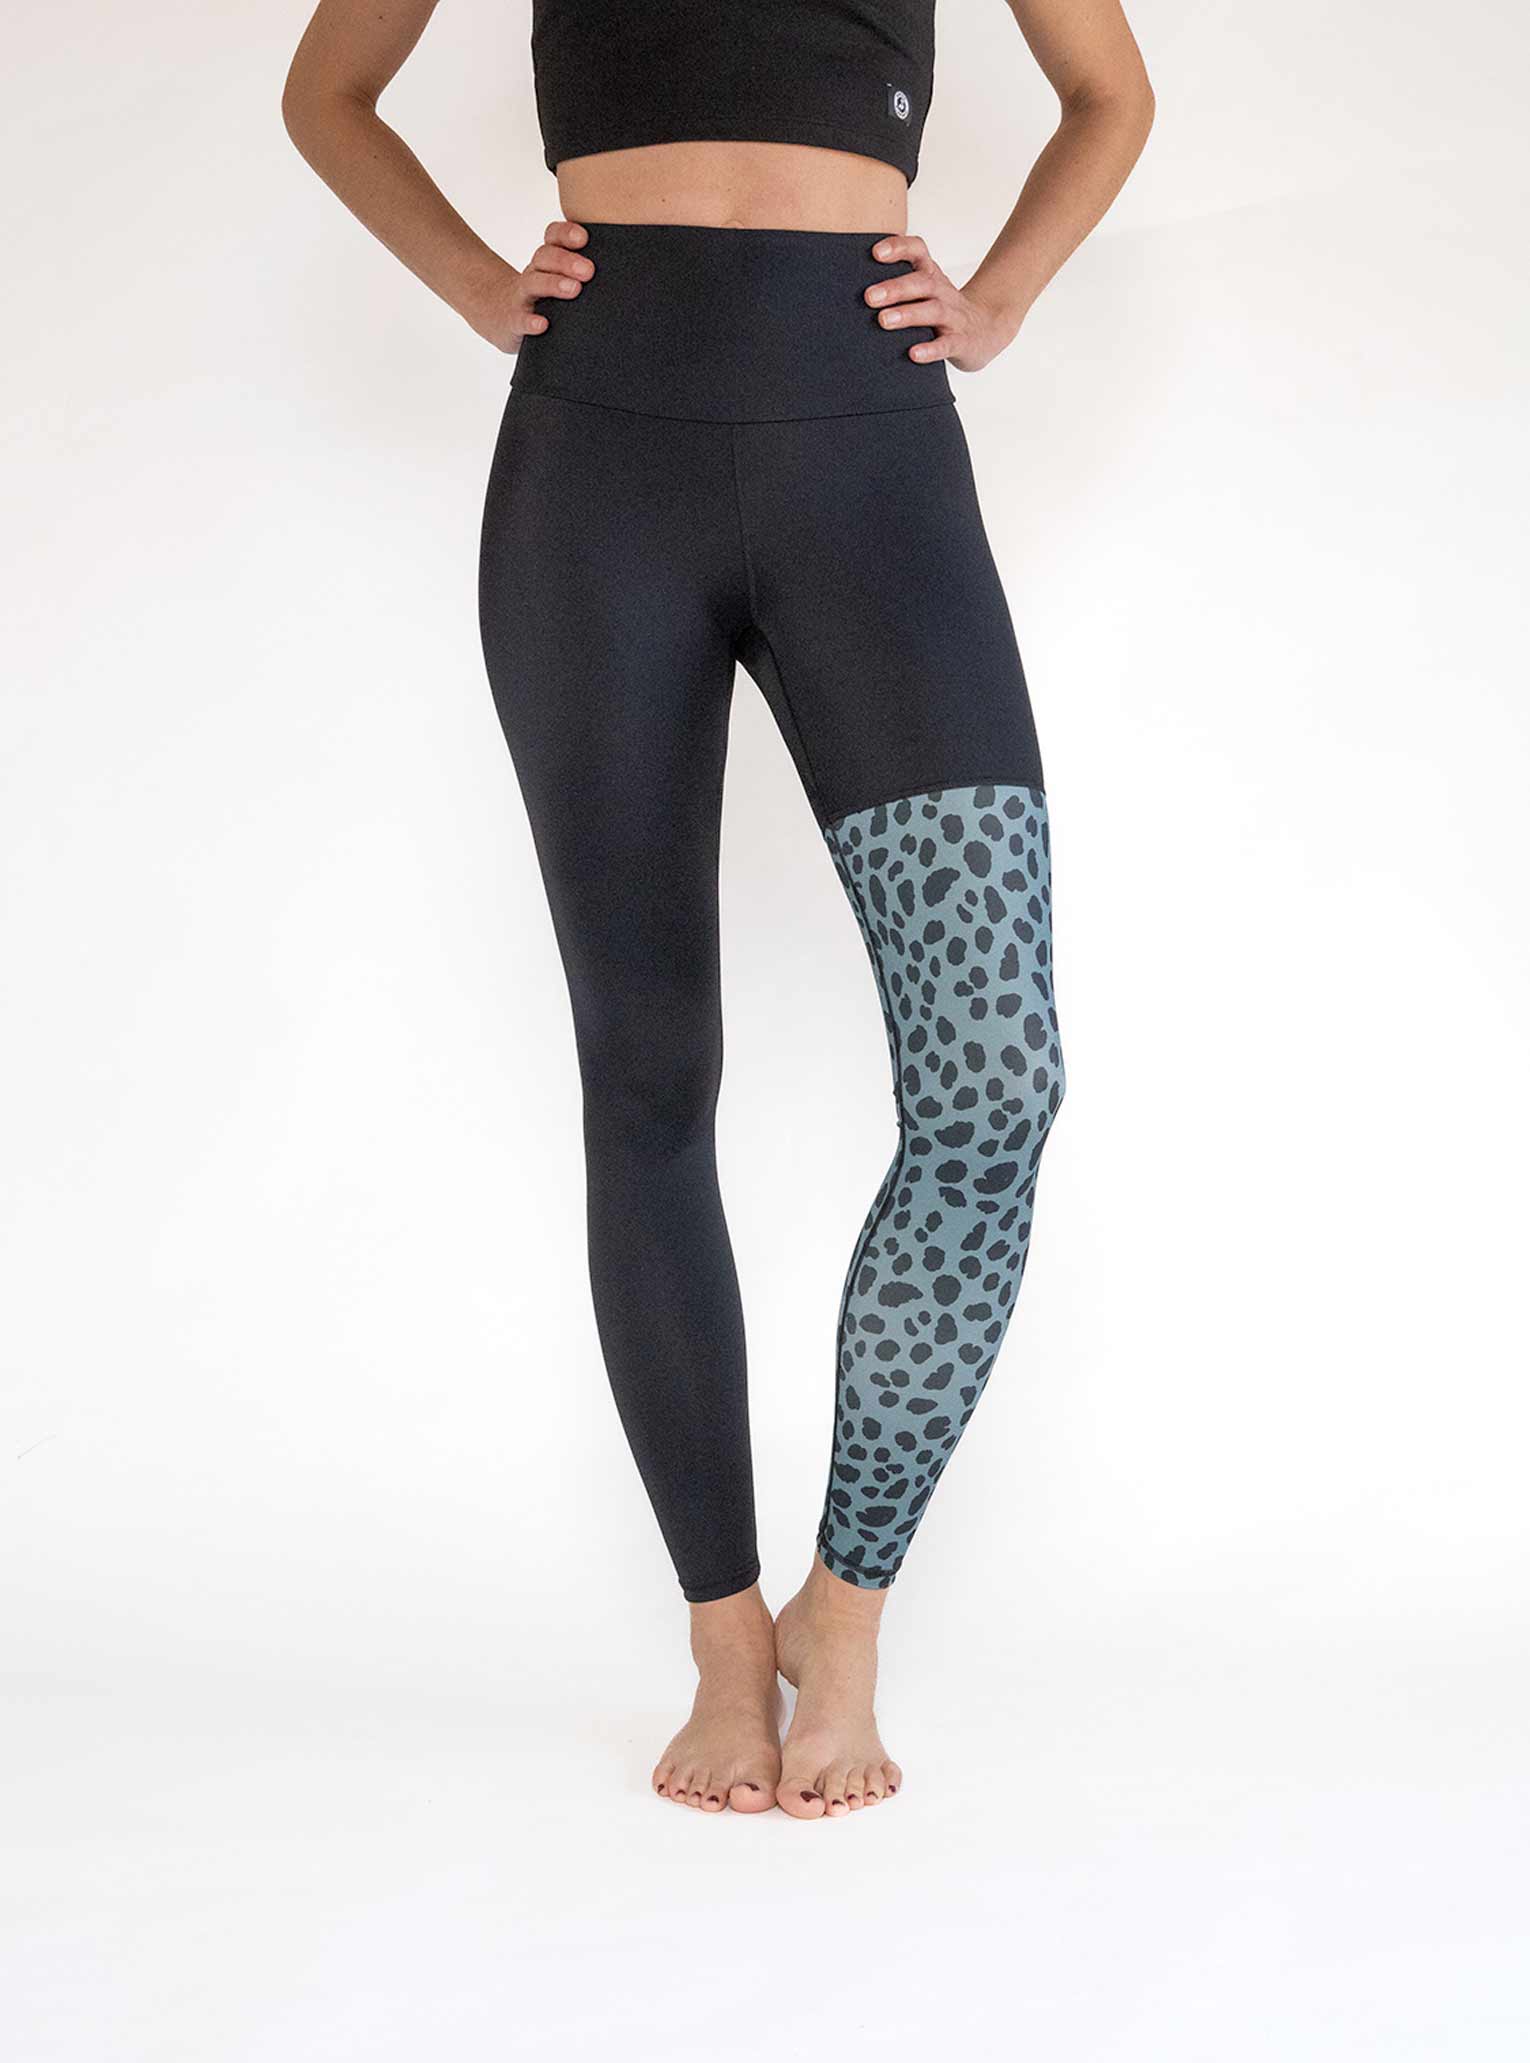 Mightly Girls Fair Trade Organic Cotton Flare Leggings Yoga Pant - Small  (6.7), Black